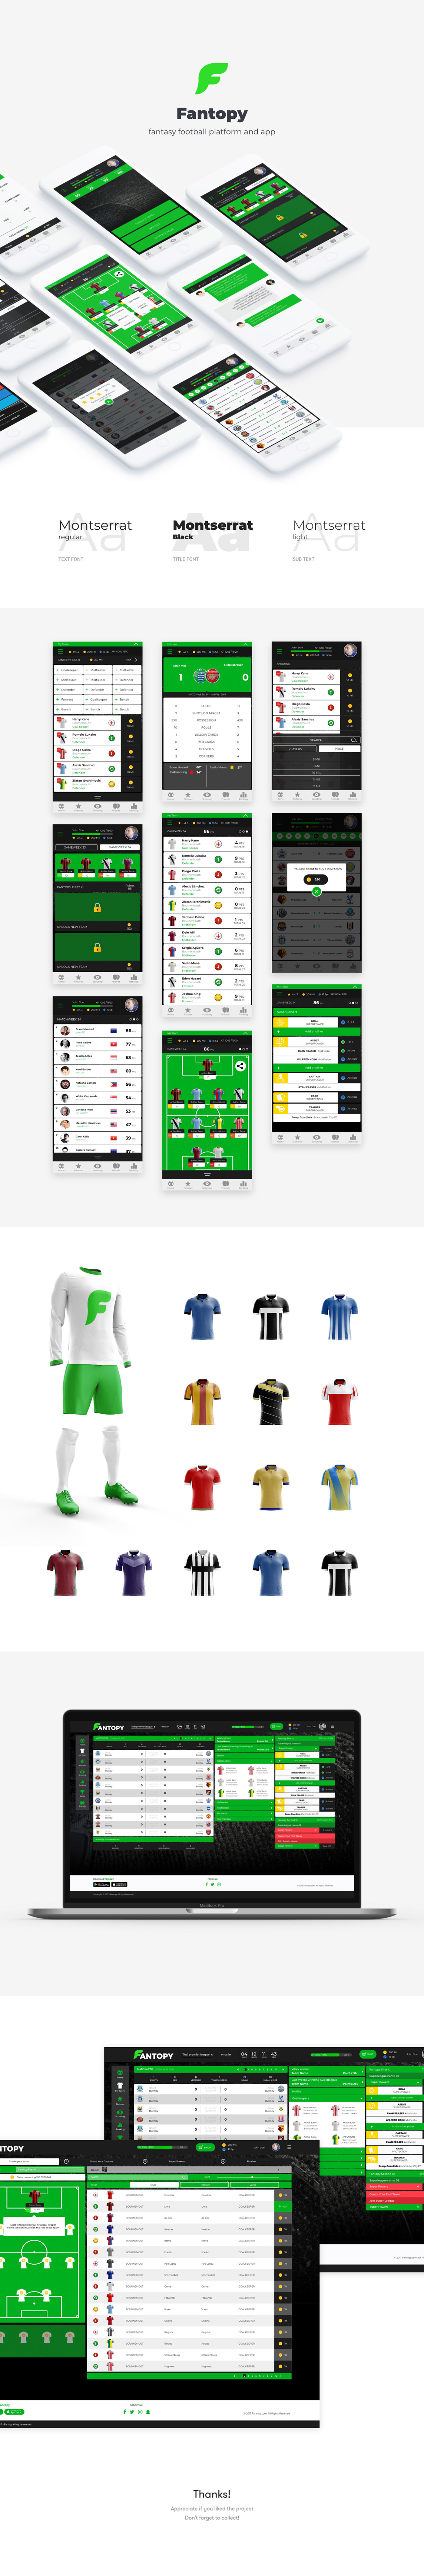 ux UI soccer mobile app game fantasyfootball fantasygame uidesign football